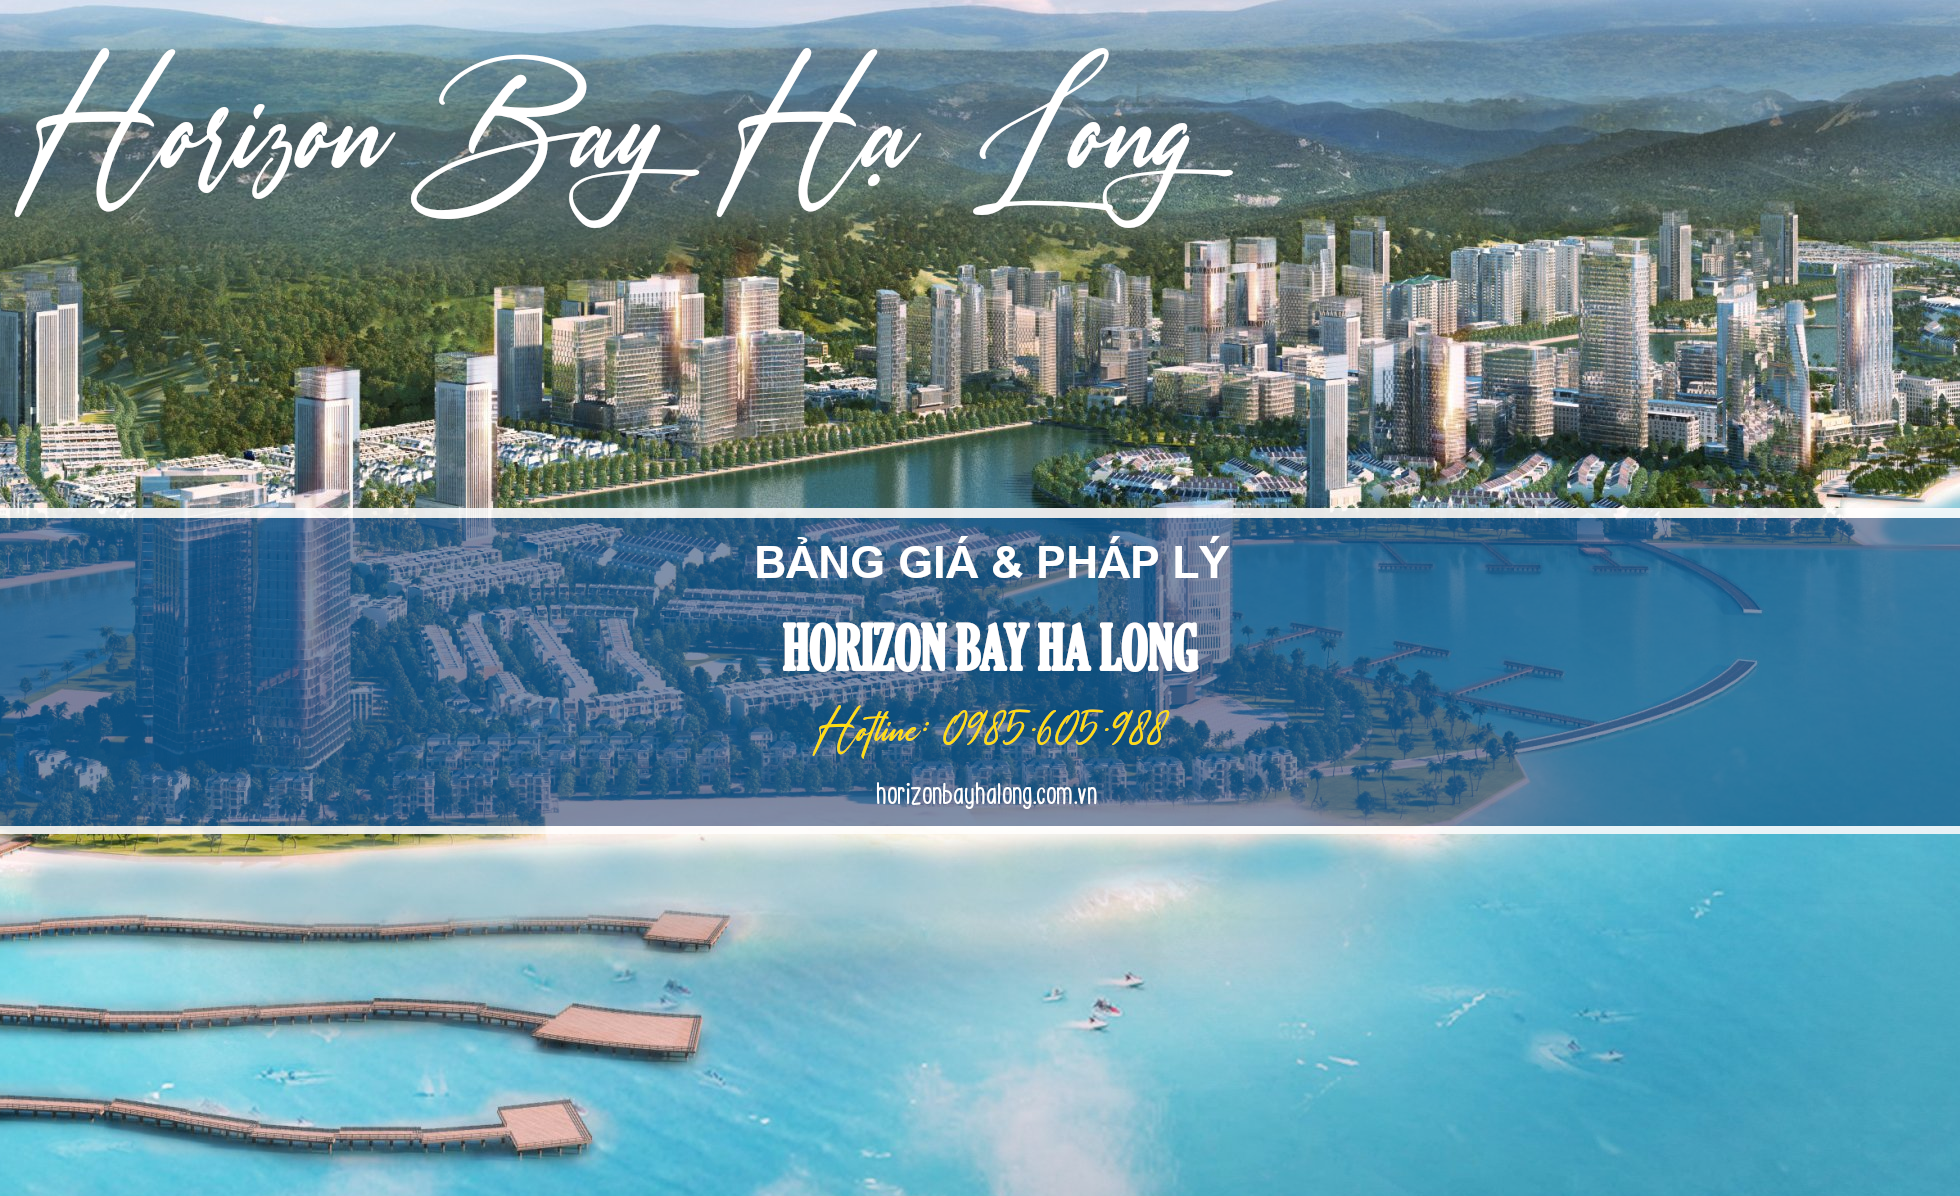 Horizon Bay Ha Long 2021